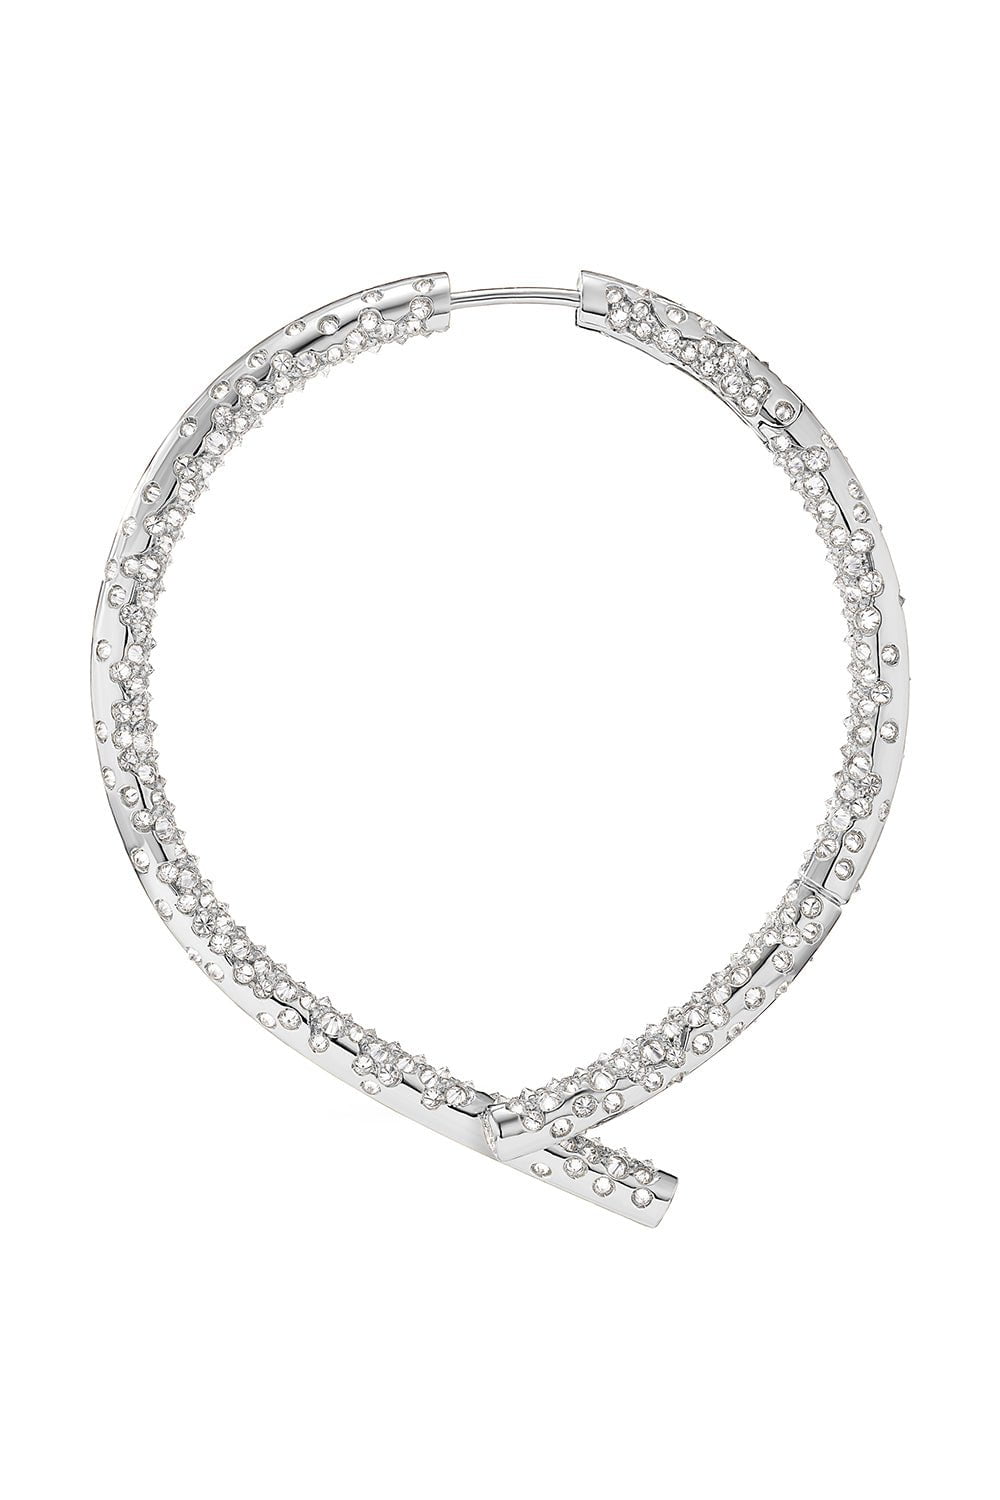 TABAYER-Oera Orb Diamond Earrings-WHITE GOLD